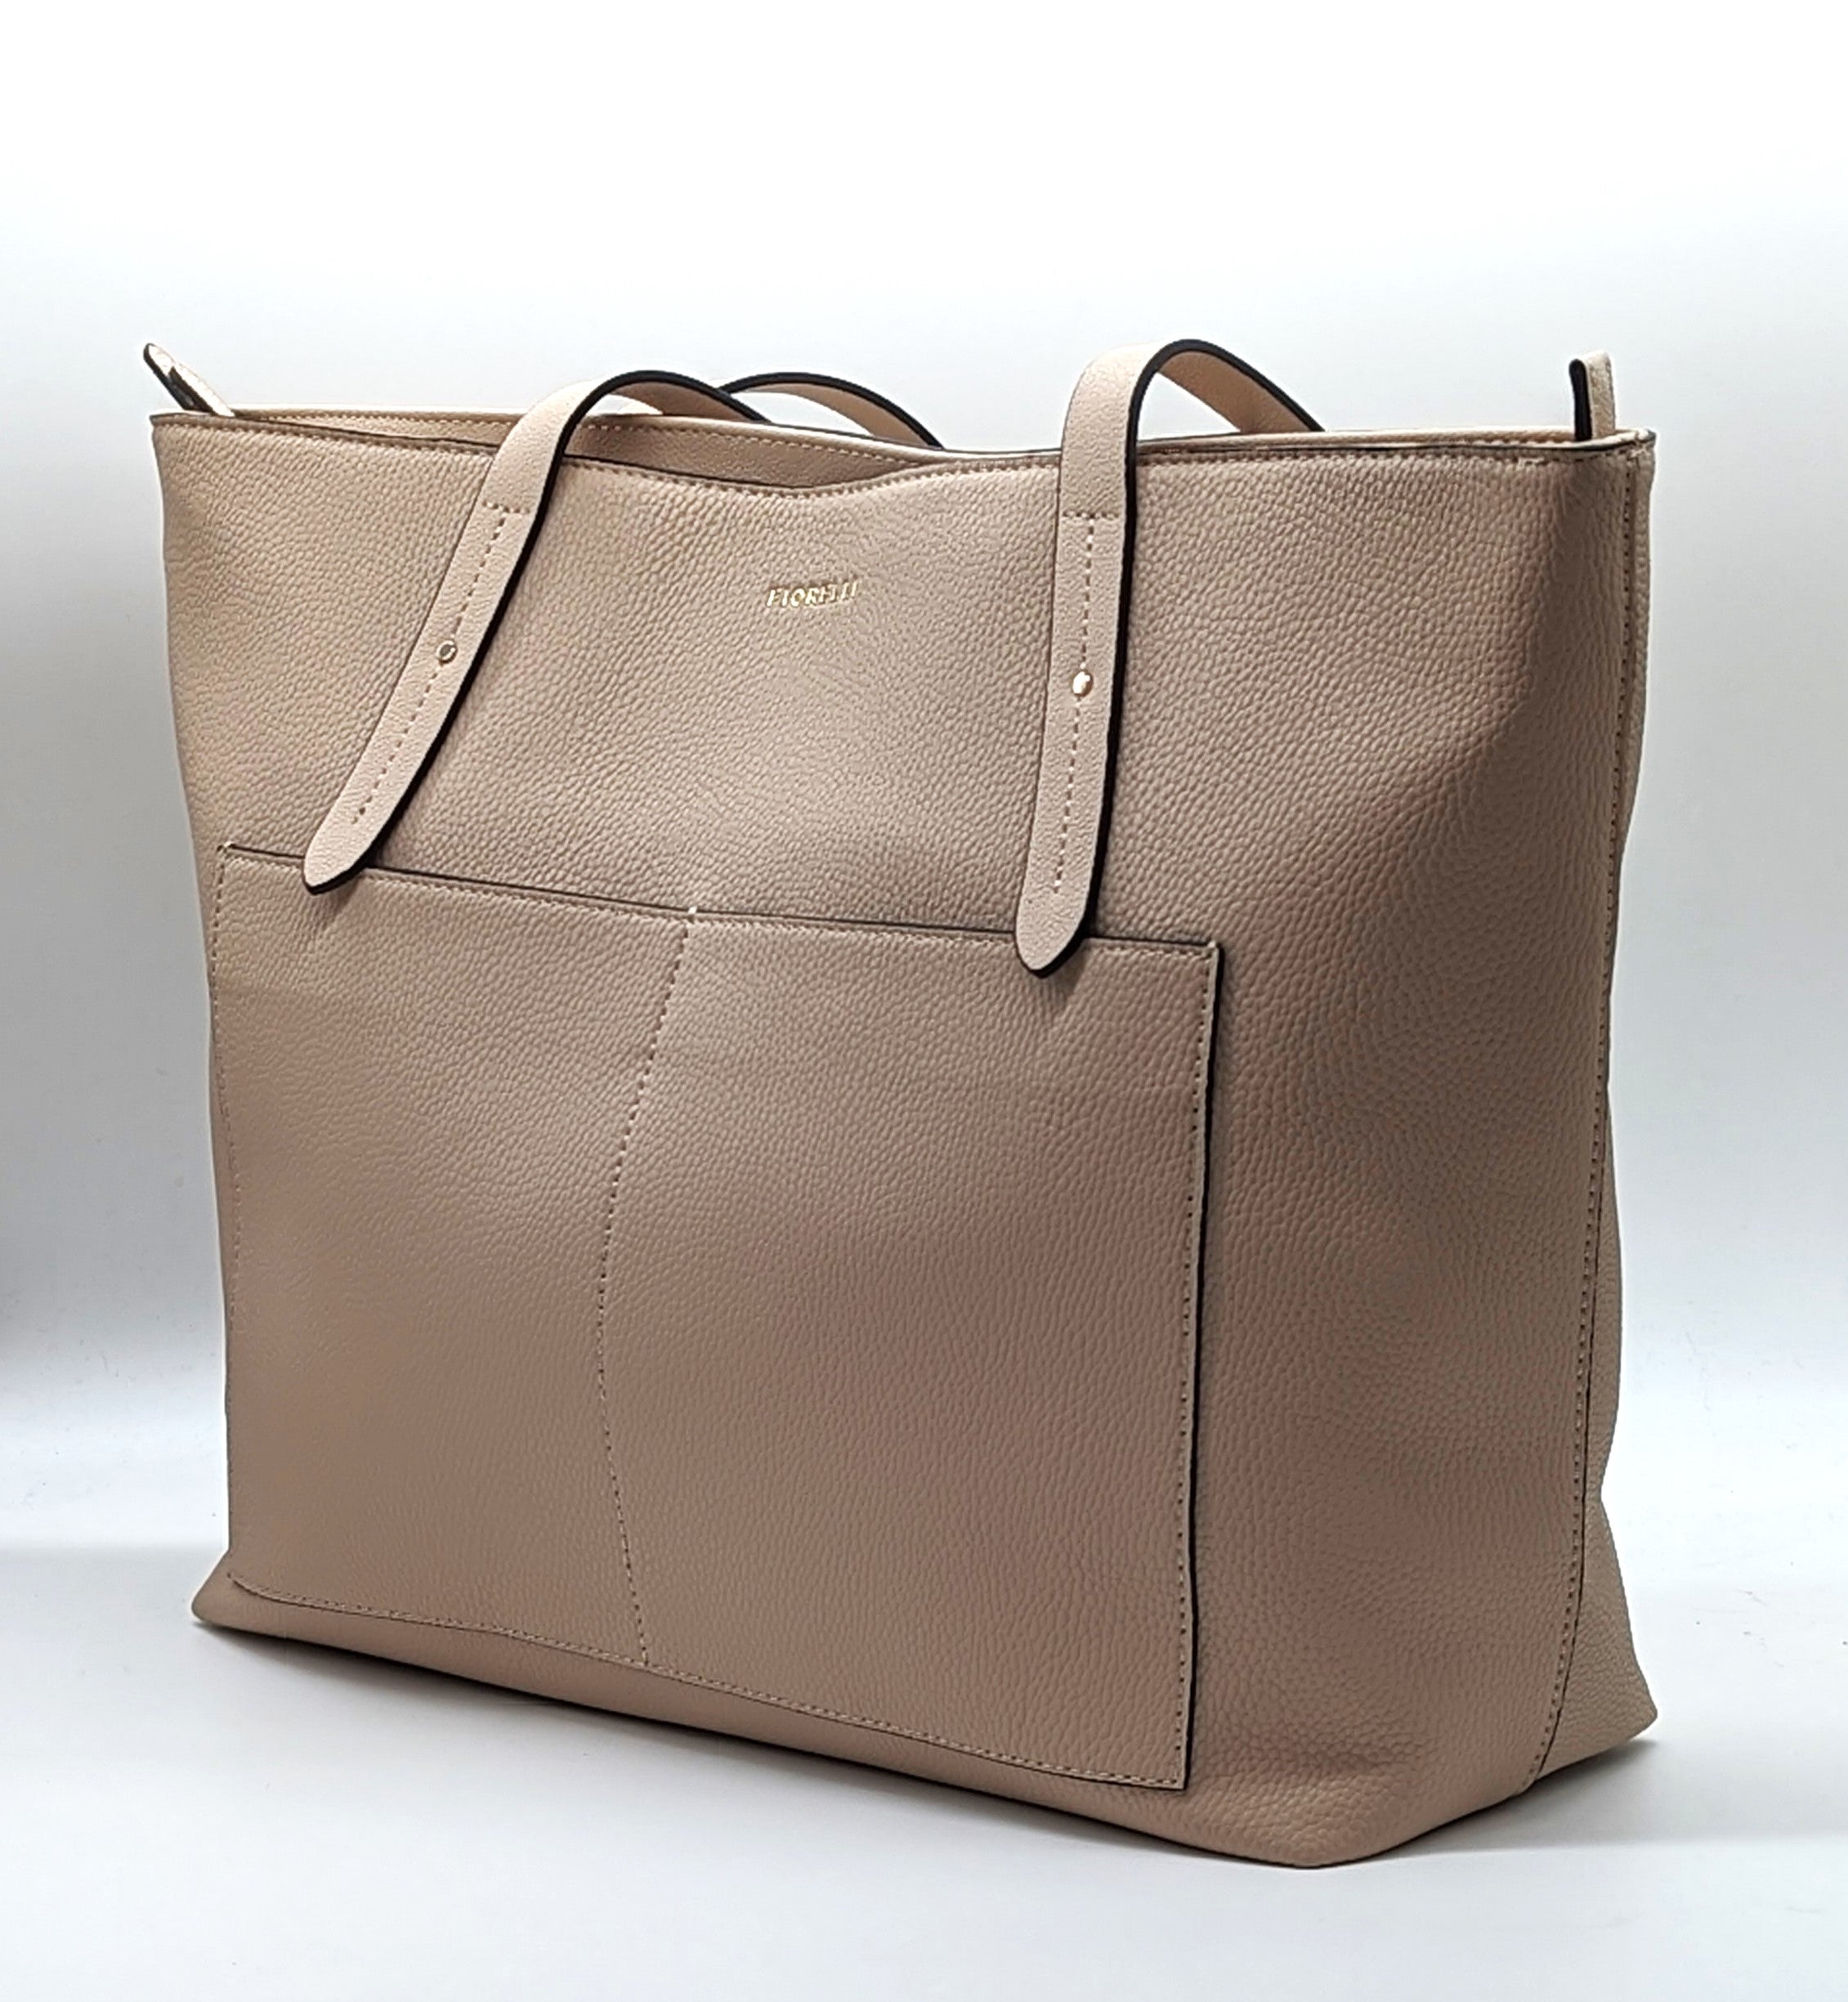 Fiorelli Handbags - Buy Fiorelli Handbags Online in India